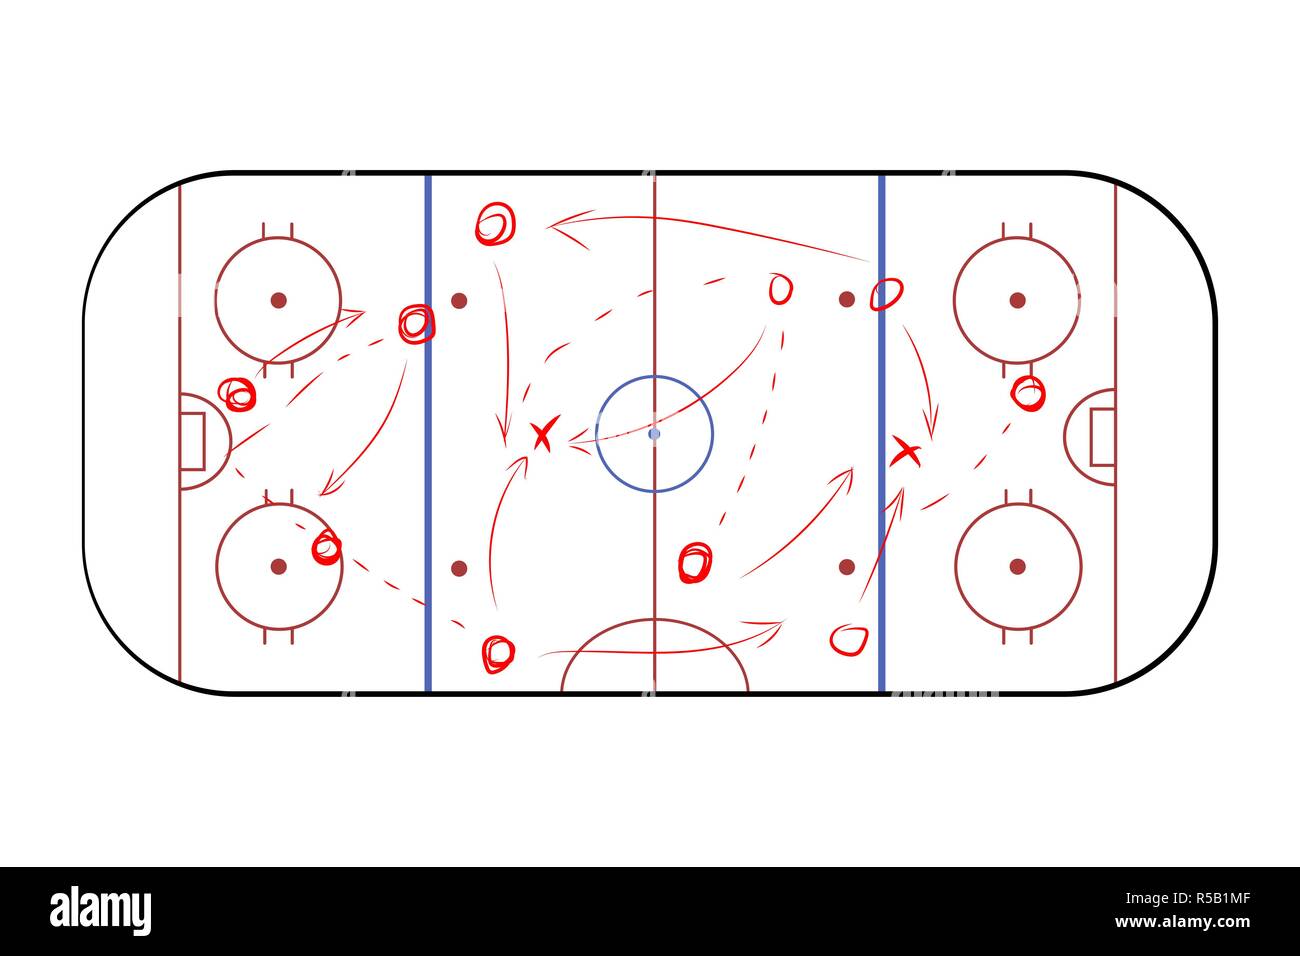 Ice Hockey Goal Dimensions & Drawings